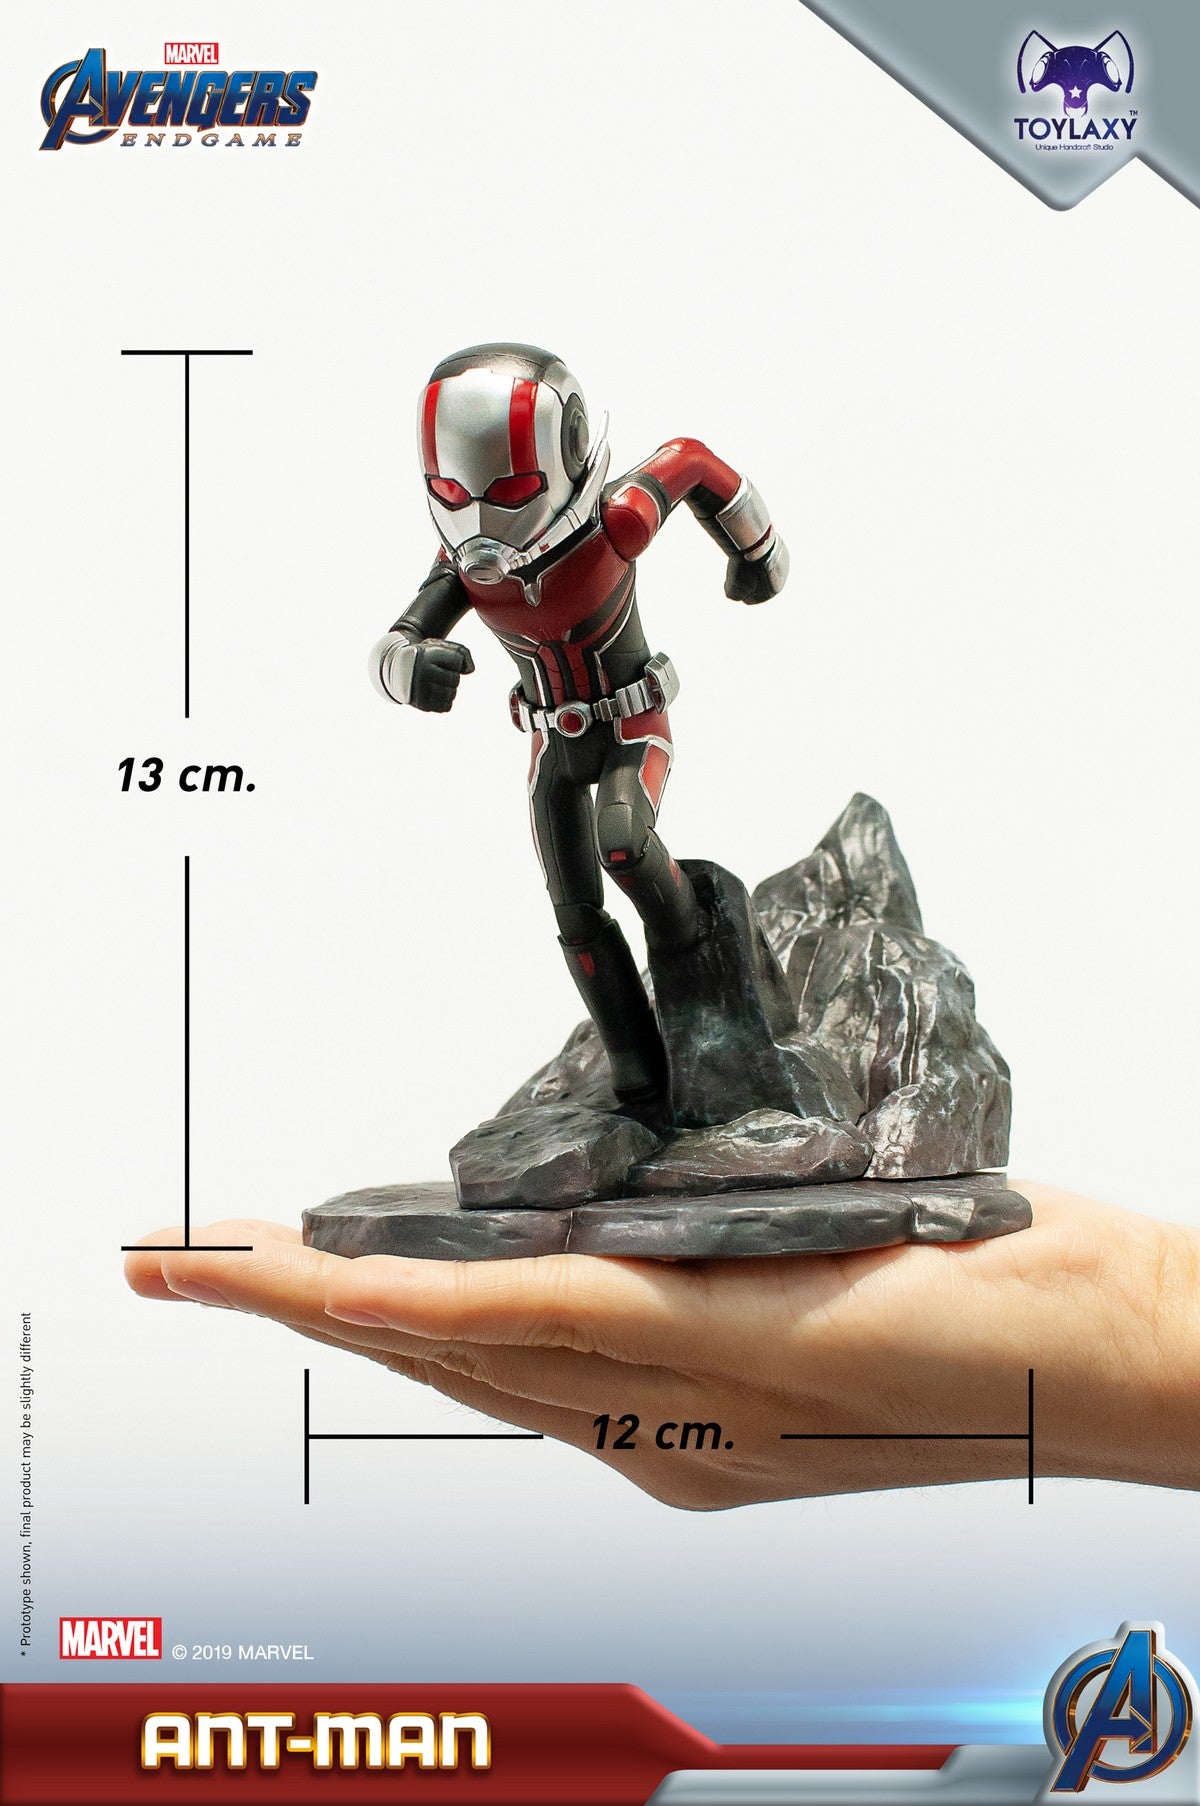 漫威復仇者聯盟：蟻俠正版模型手辦人偶玩具 Marvel's Avengers: Endgame Premium PVC Ant Man official figure toy size